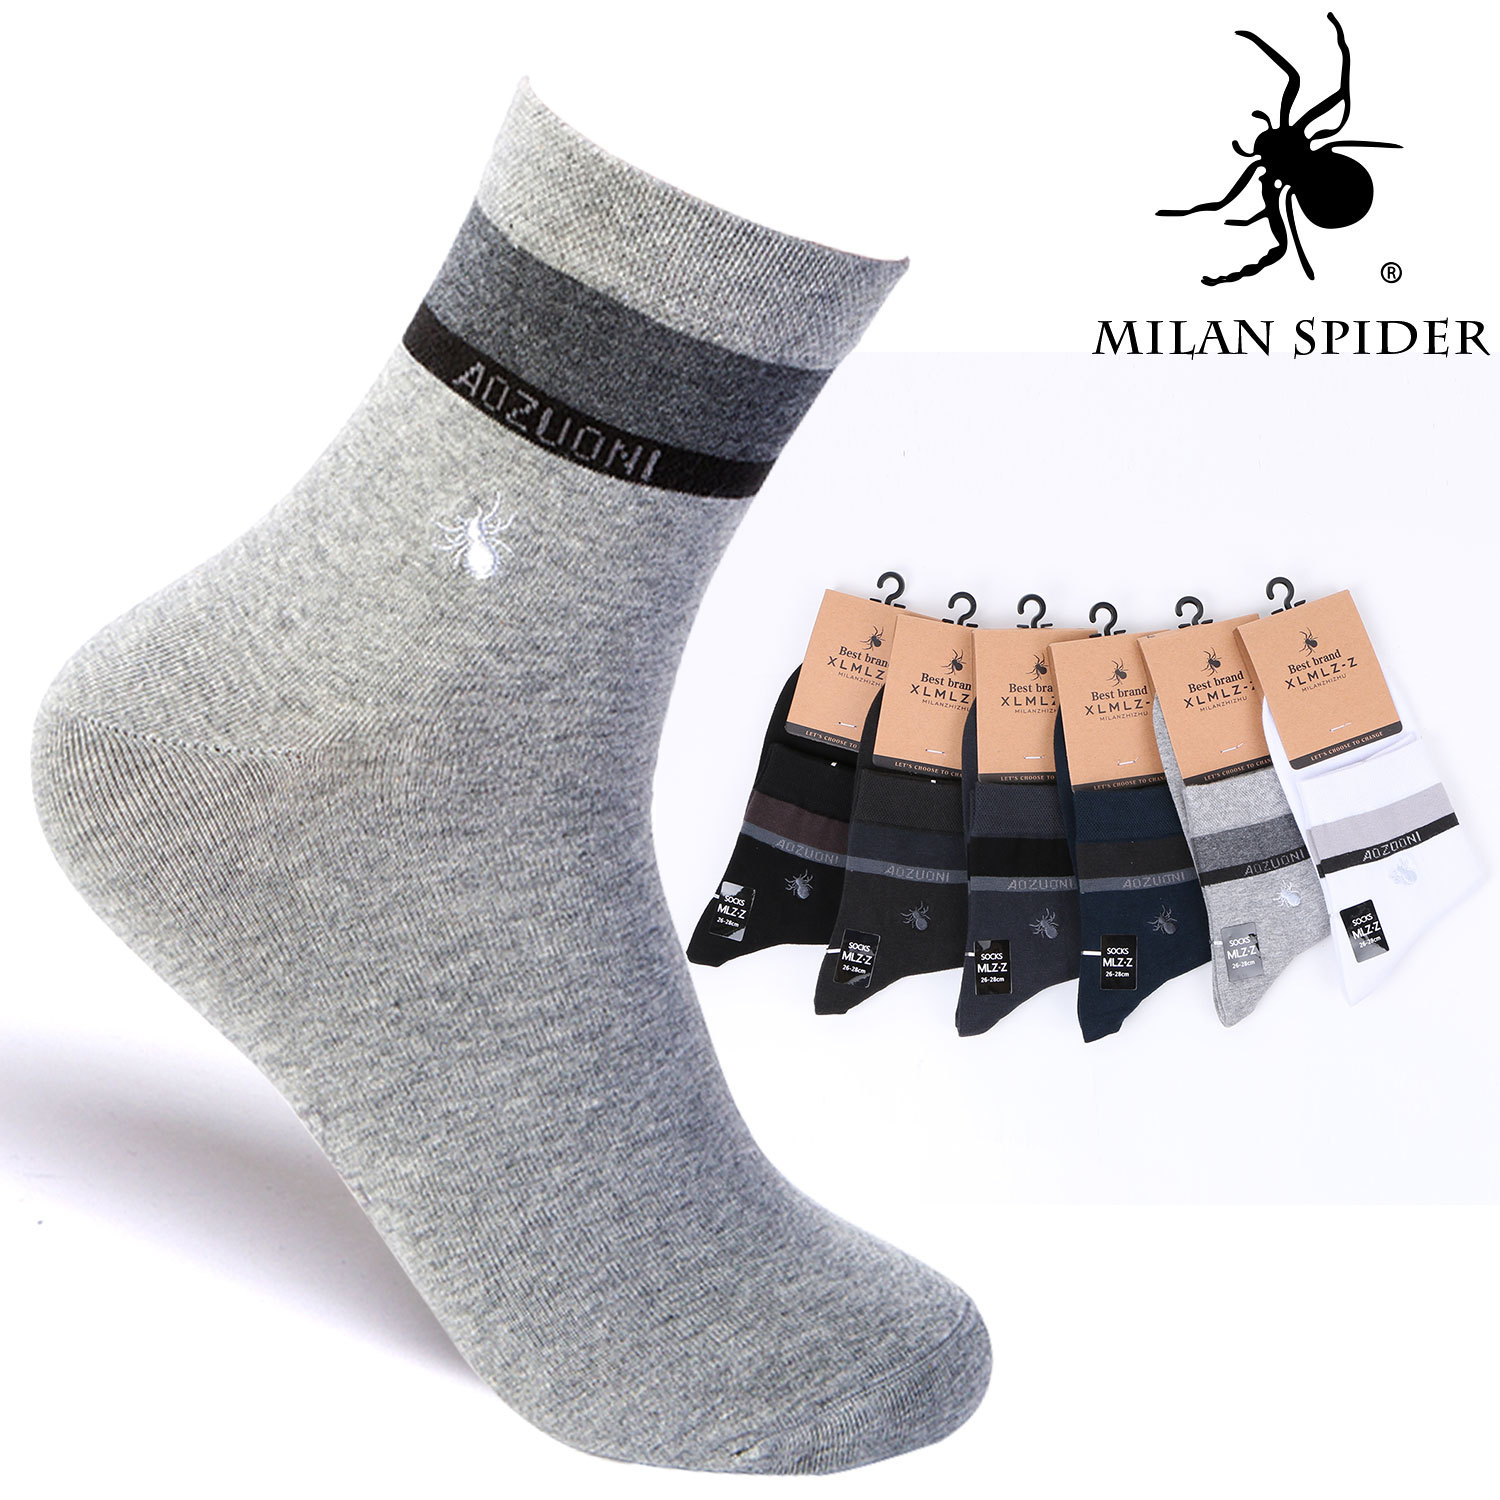 Milan Spider Autumn Winter Tube Men's Socks Socks Cotton Leisure Men's Business Sist Embroidery Cotton Socks Manufacturers Wholesale